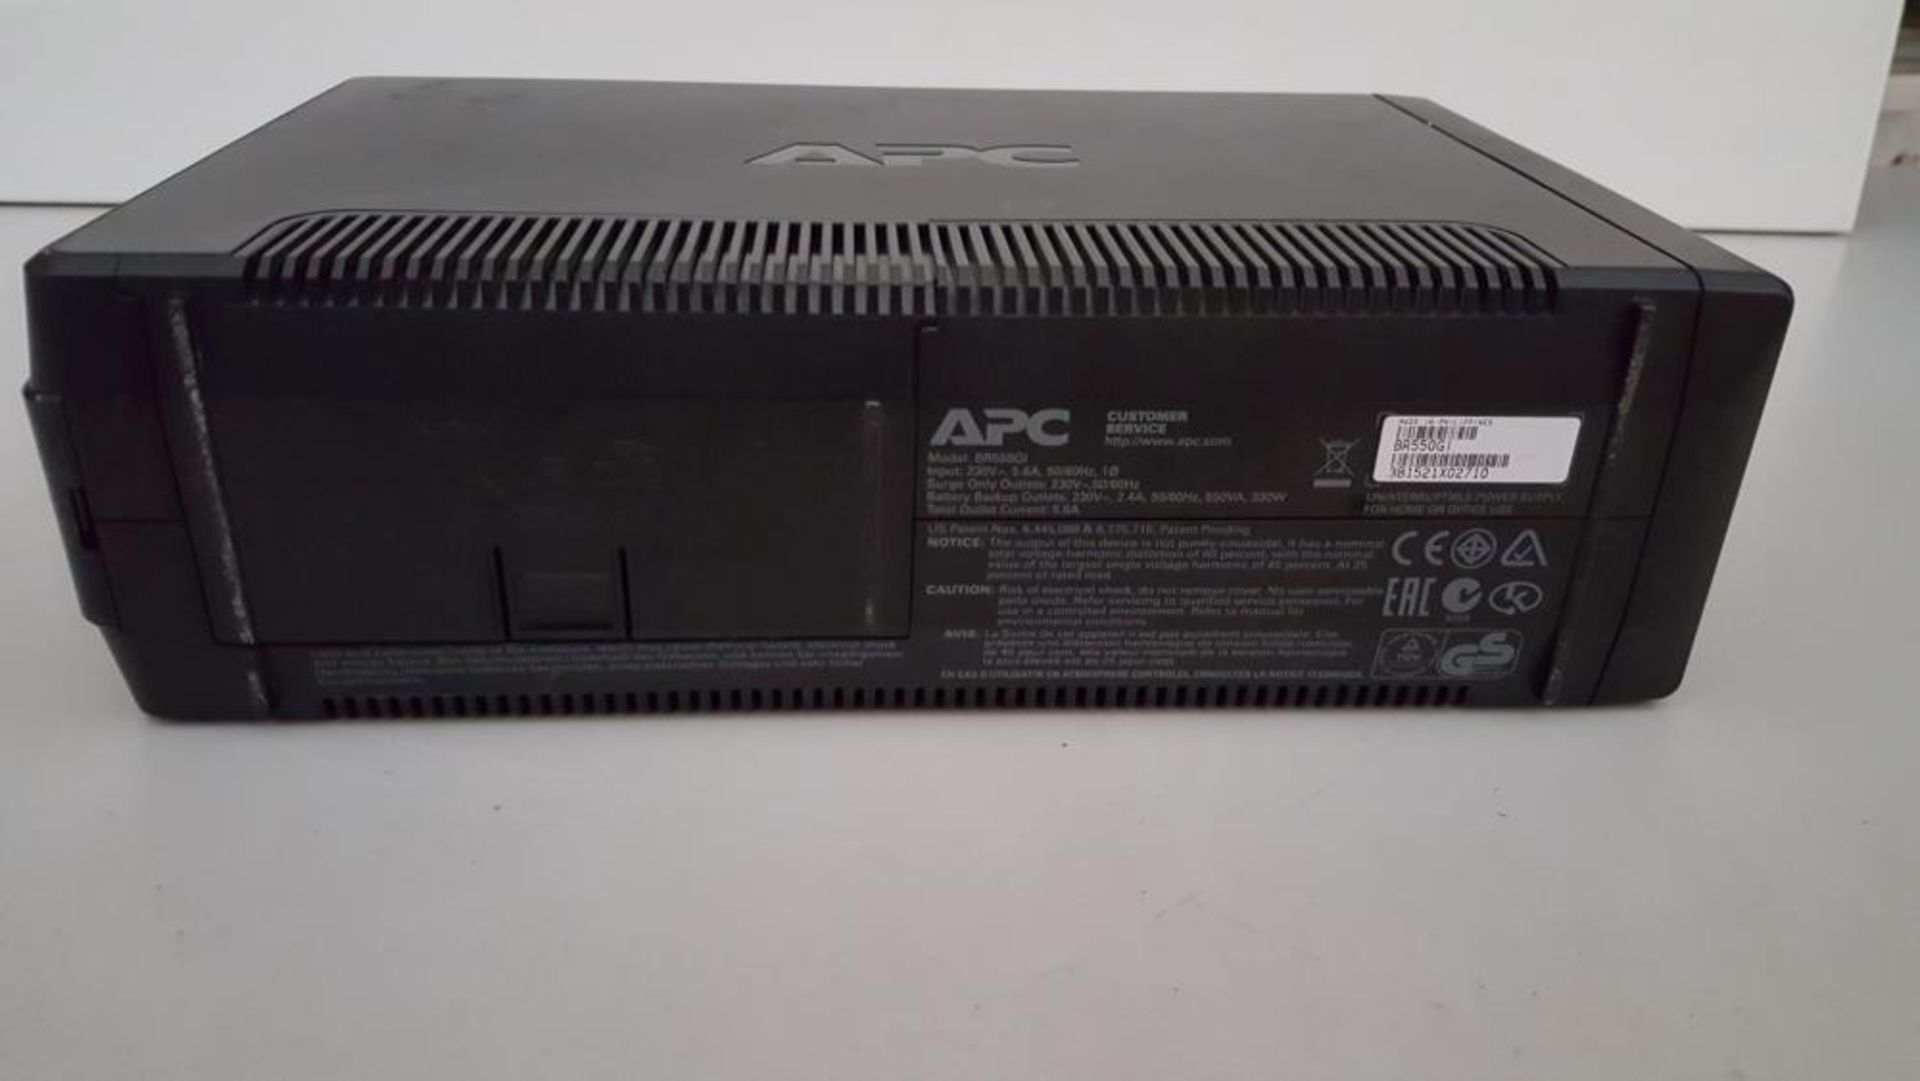 1 x APC Power-Saving Back-UPS PRO BR550 - Ref H460 - CL011 - Location: Altrincham WA14 As pe - Image 4 of 5